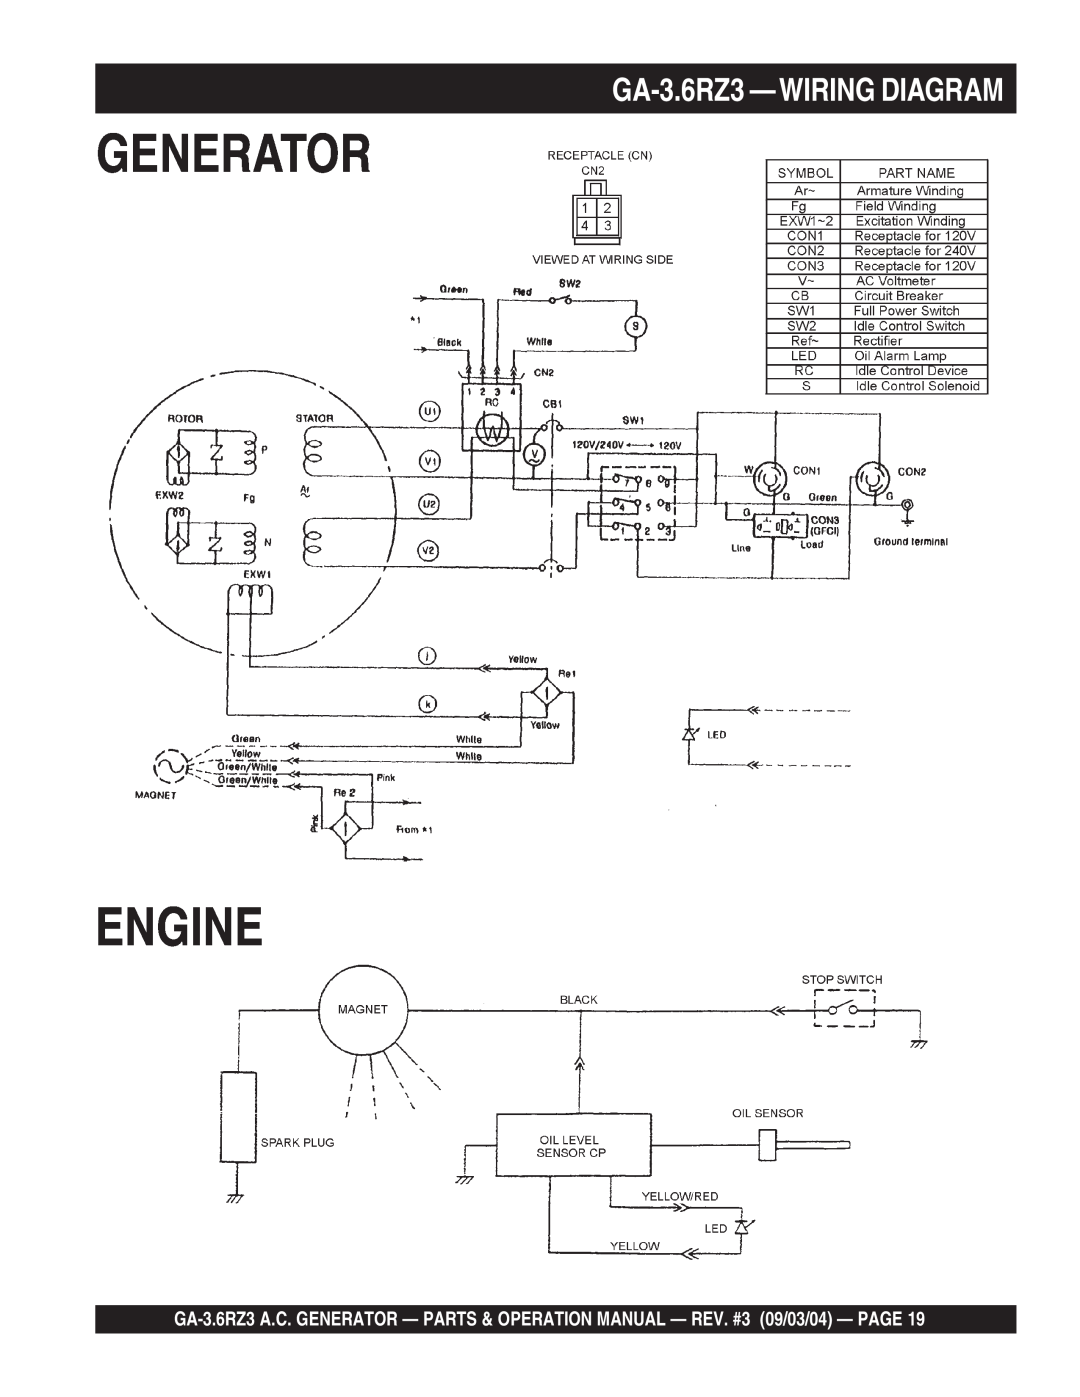 Multiquip operation manual Generator Engine, GA-3.6RZ3 —WIRINGDIAGRAM 